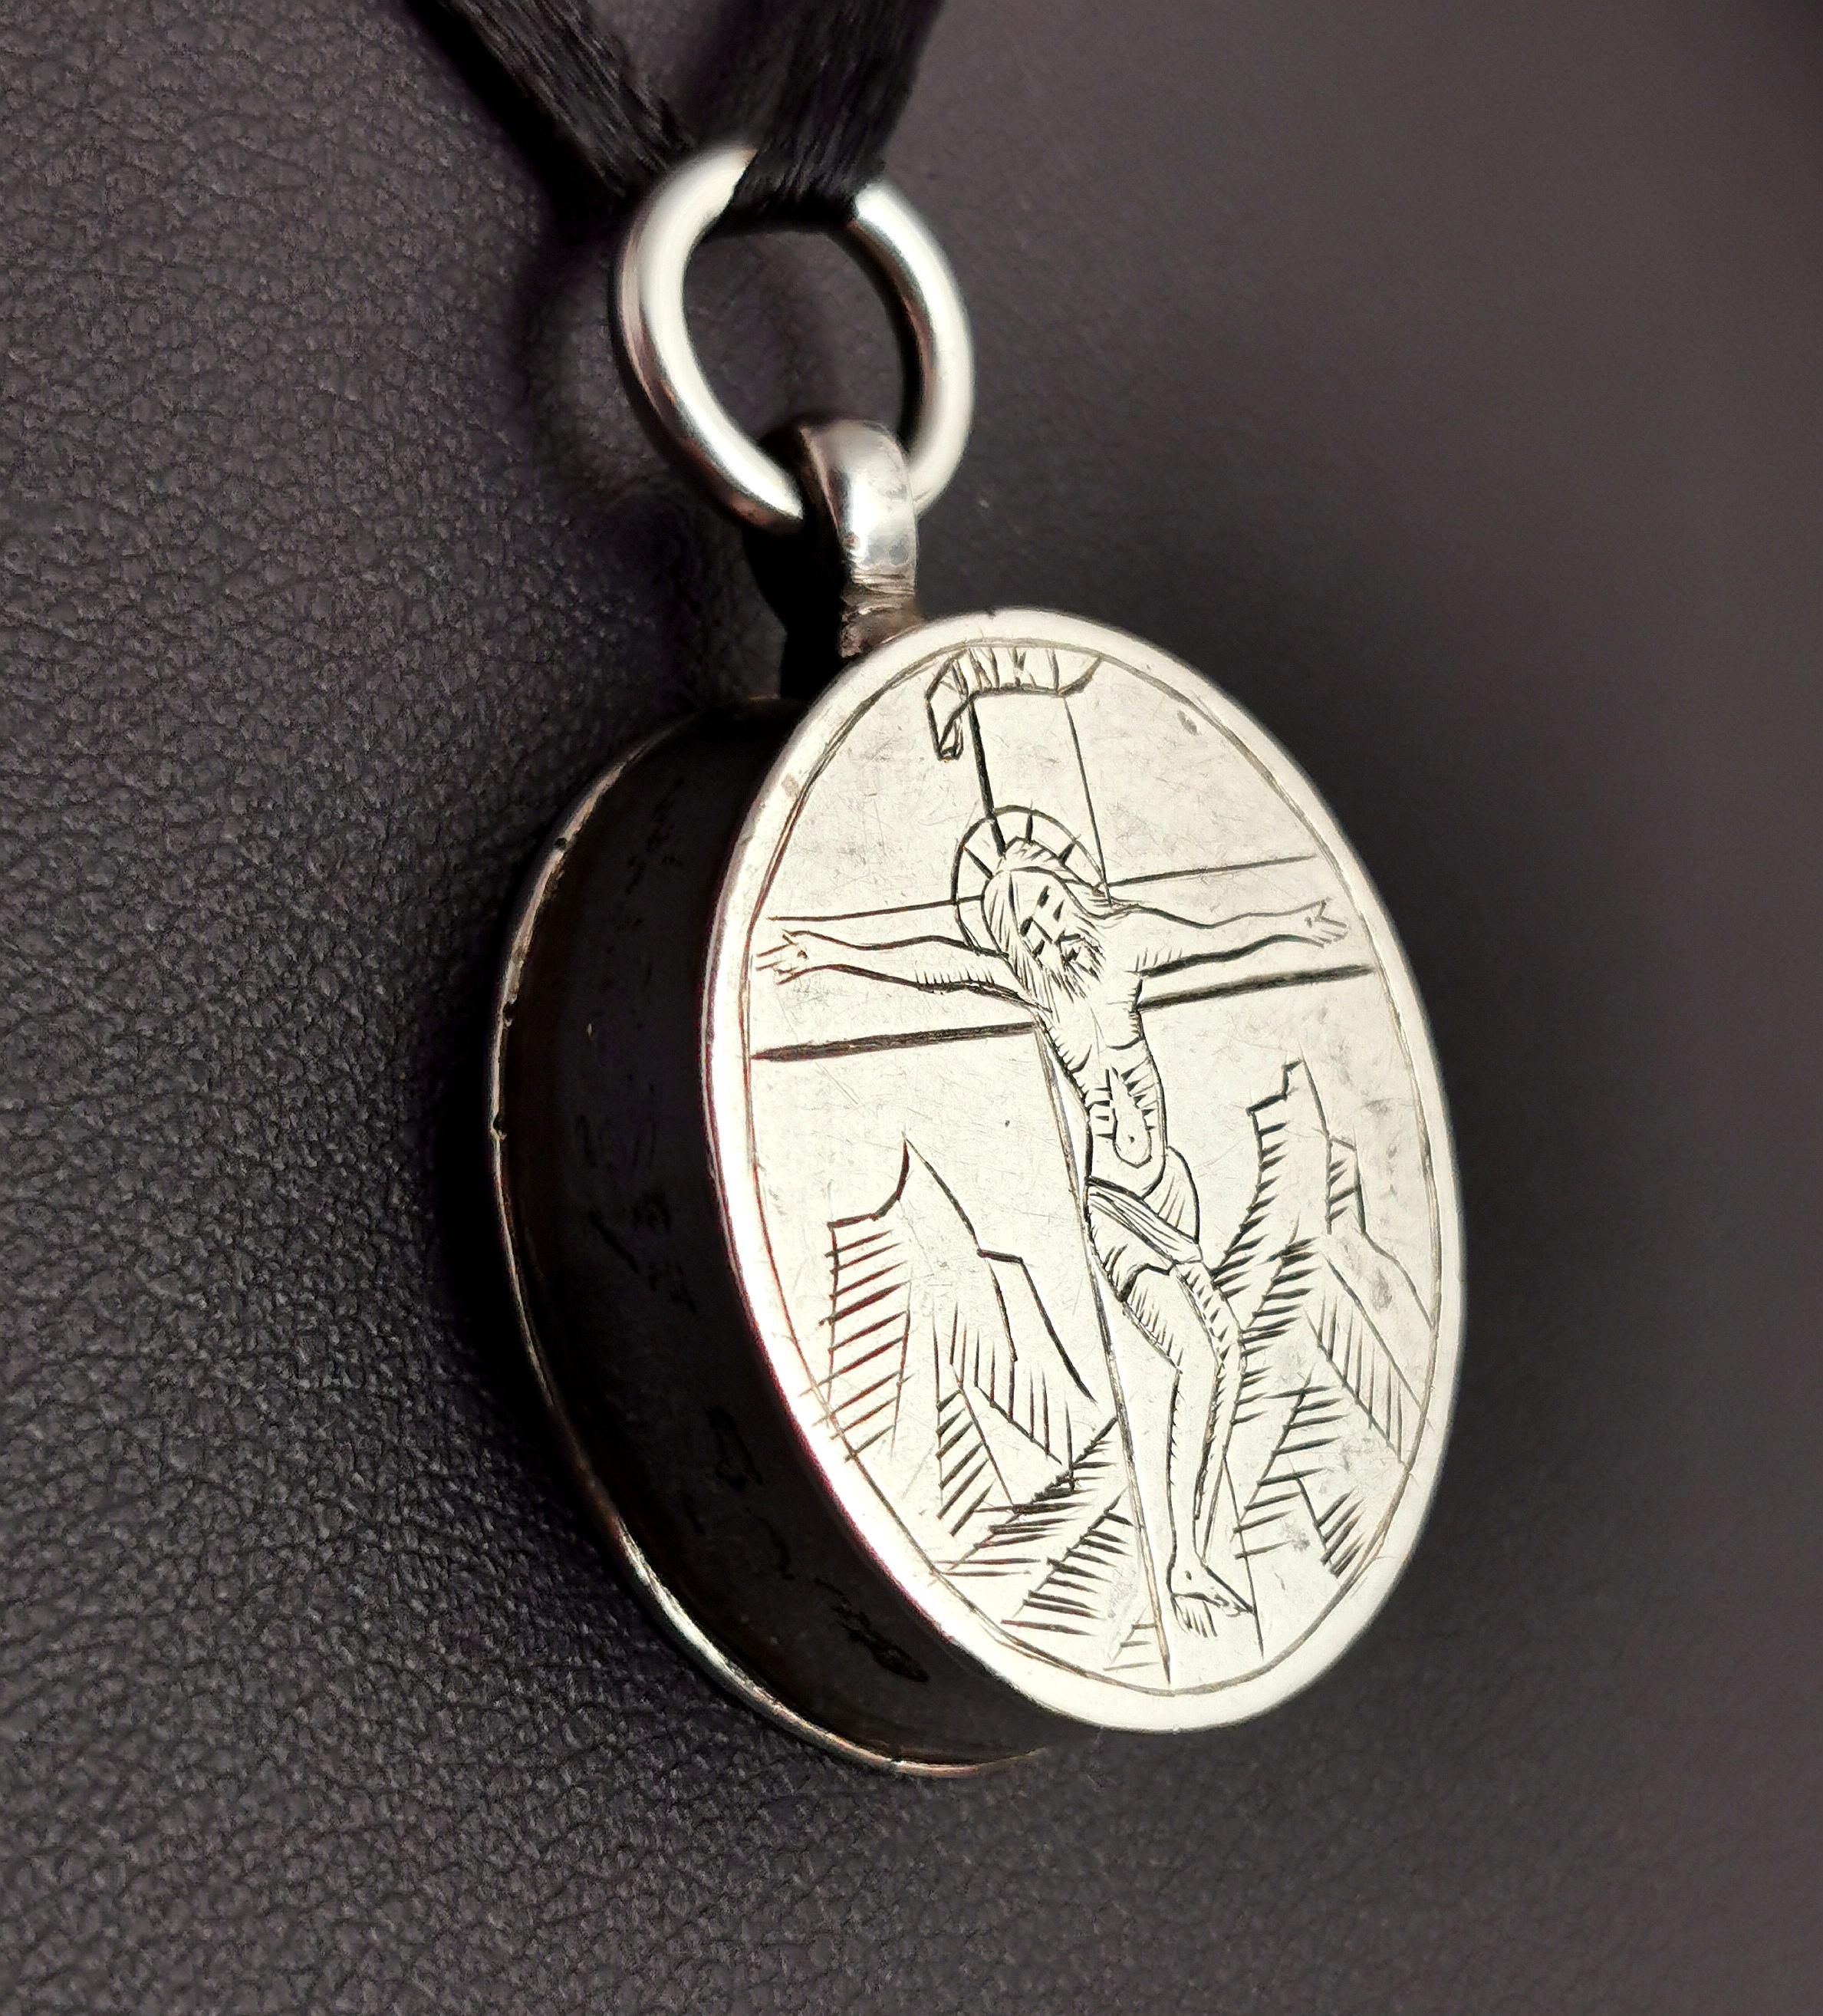 Antique Silver Reliquary Locket Pendant, Inri, Mourning, Religious For Sale 9